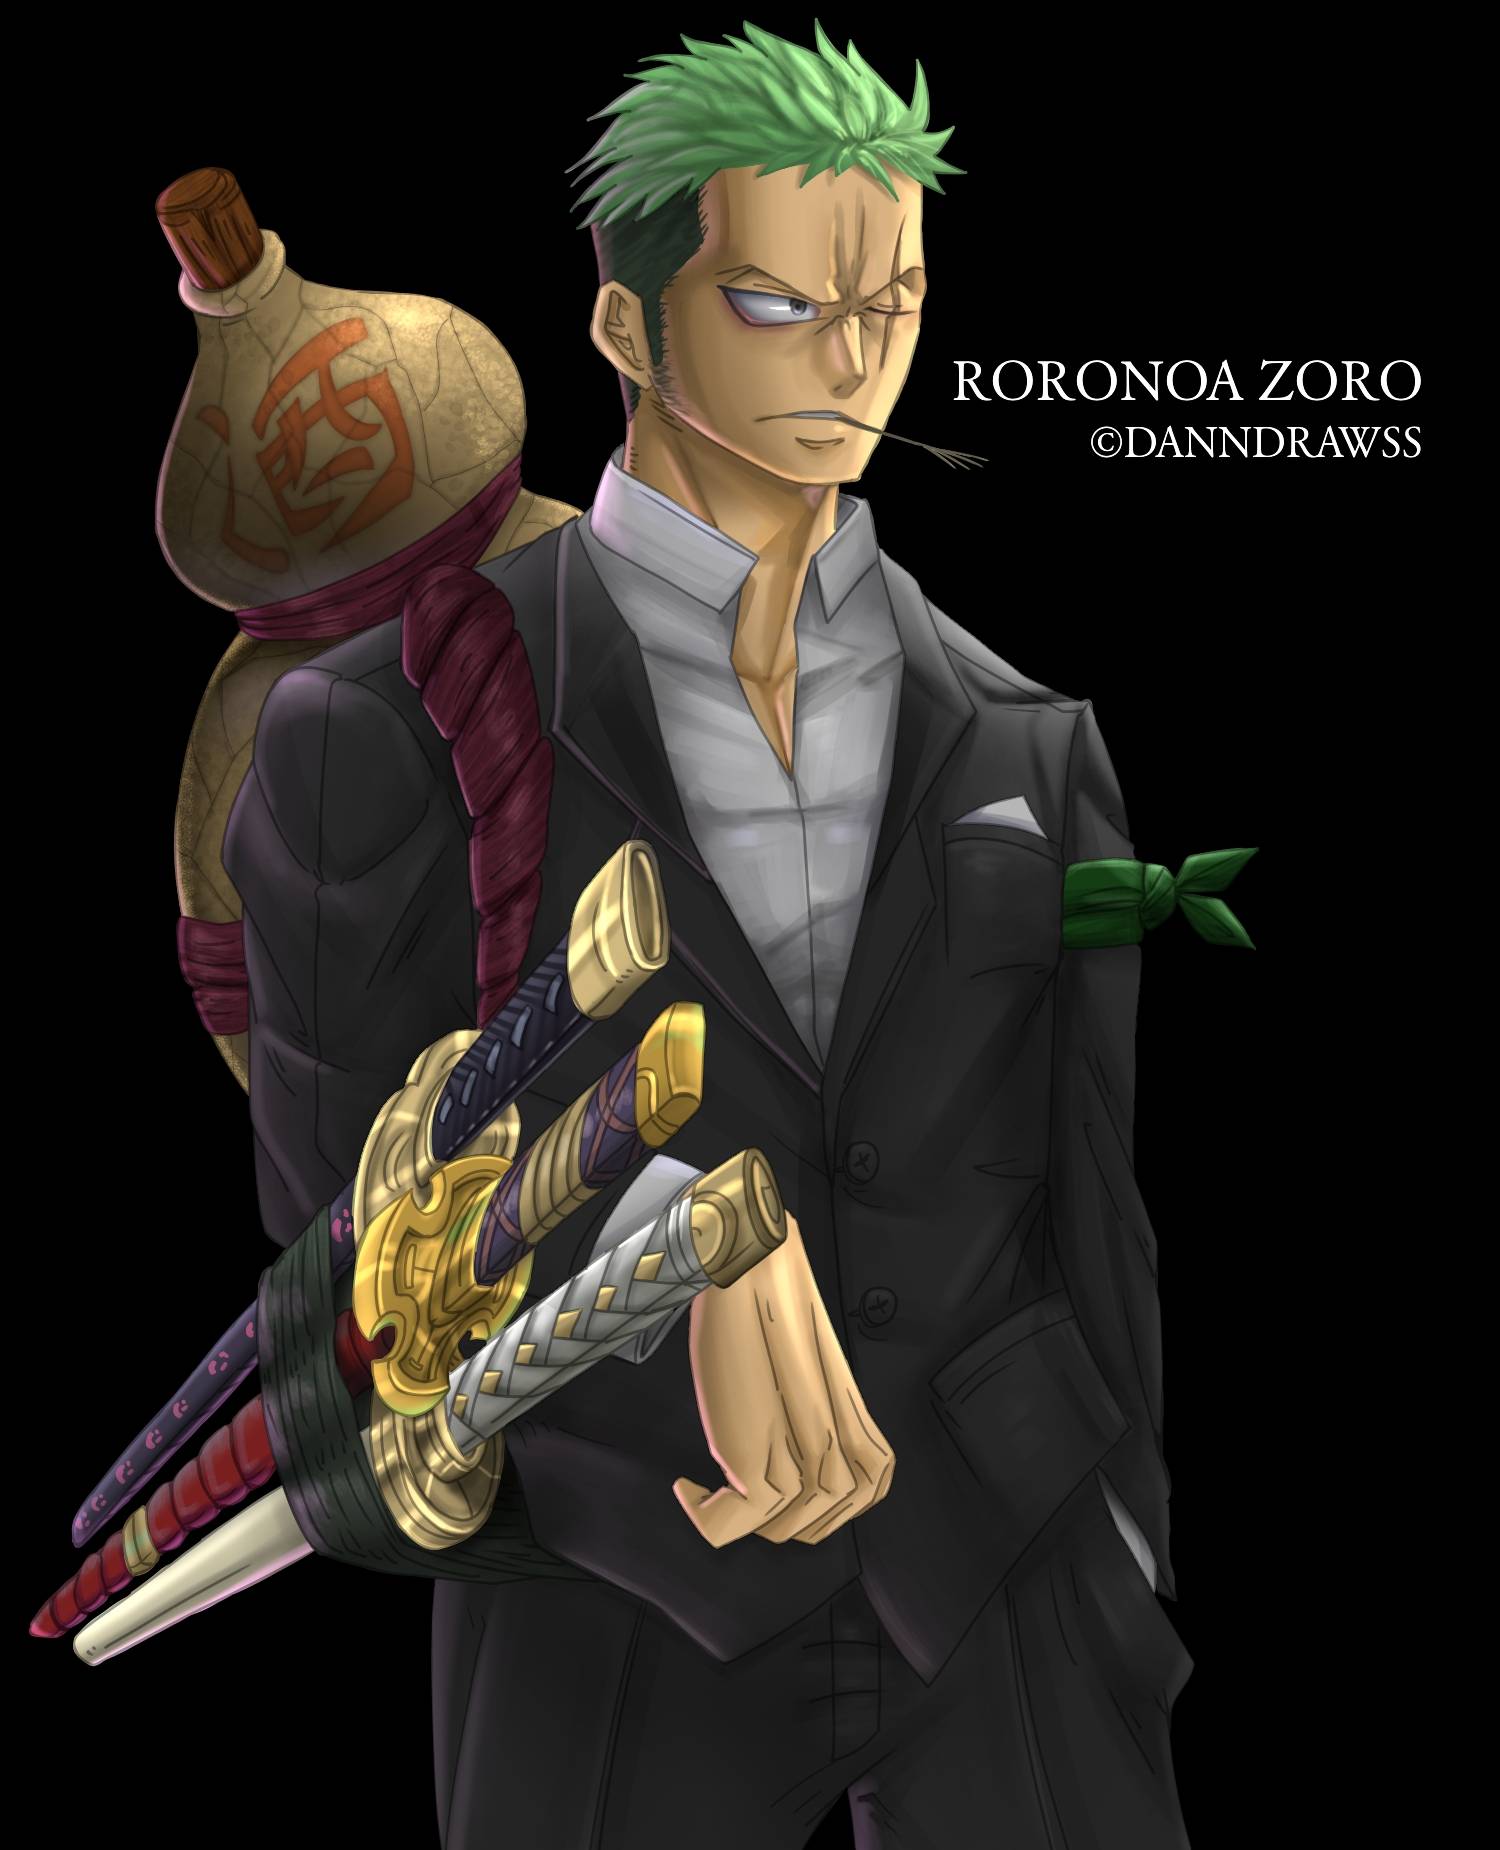 Roronoa Zoro - One Piece by BellaBridjon on DeviantArt